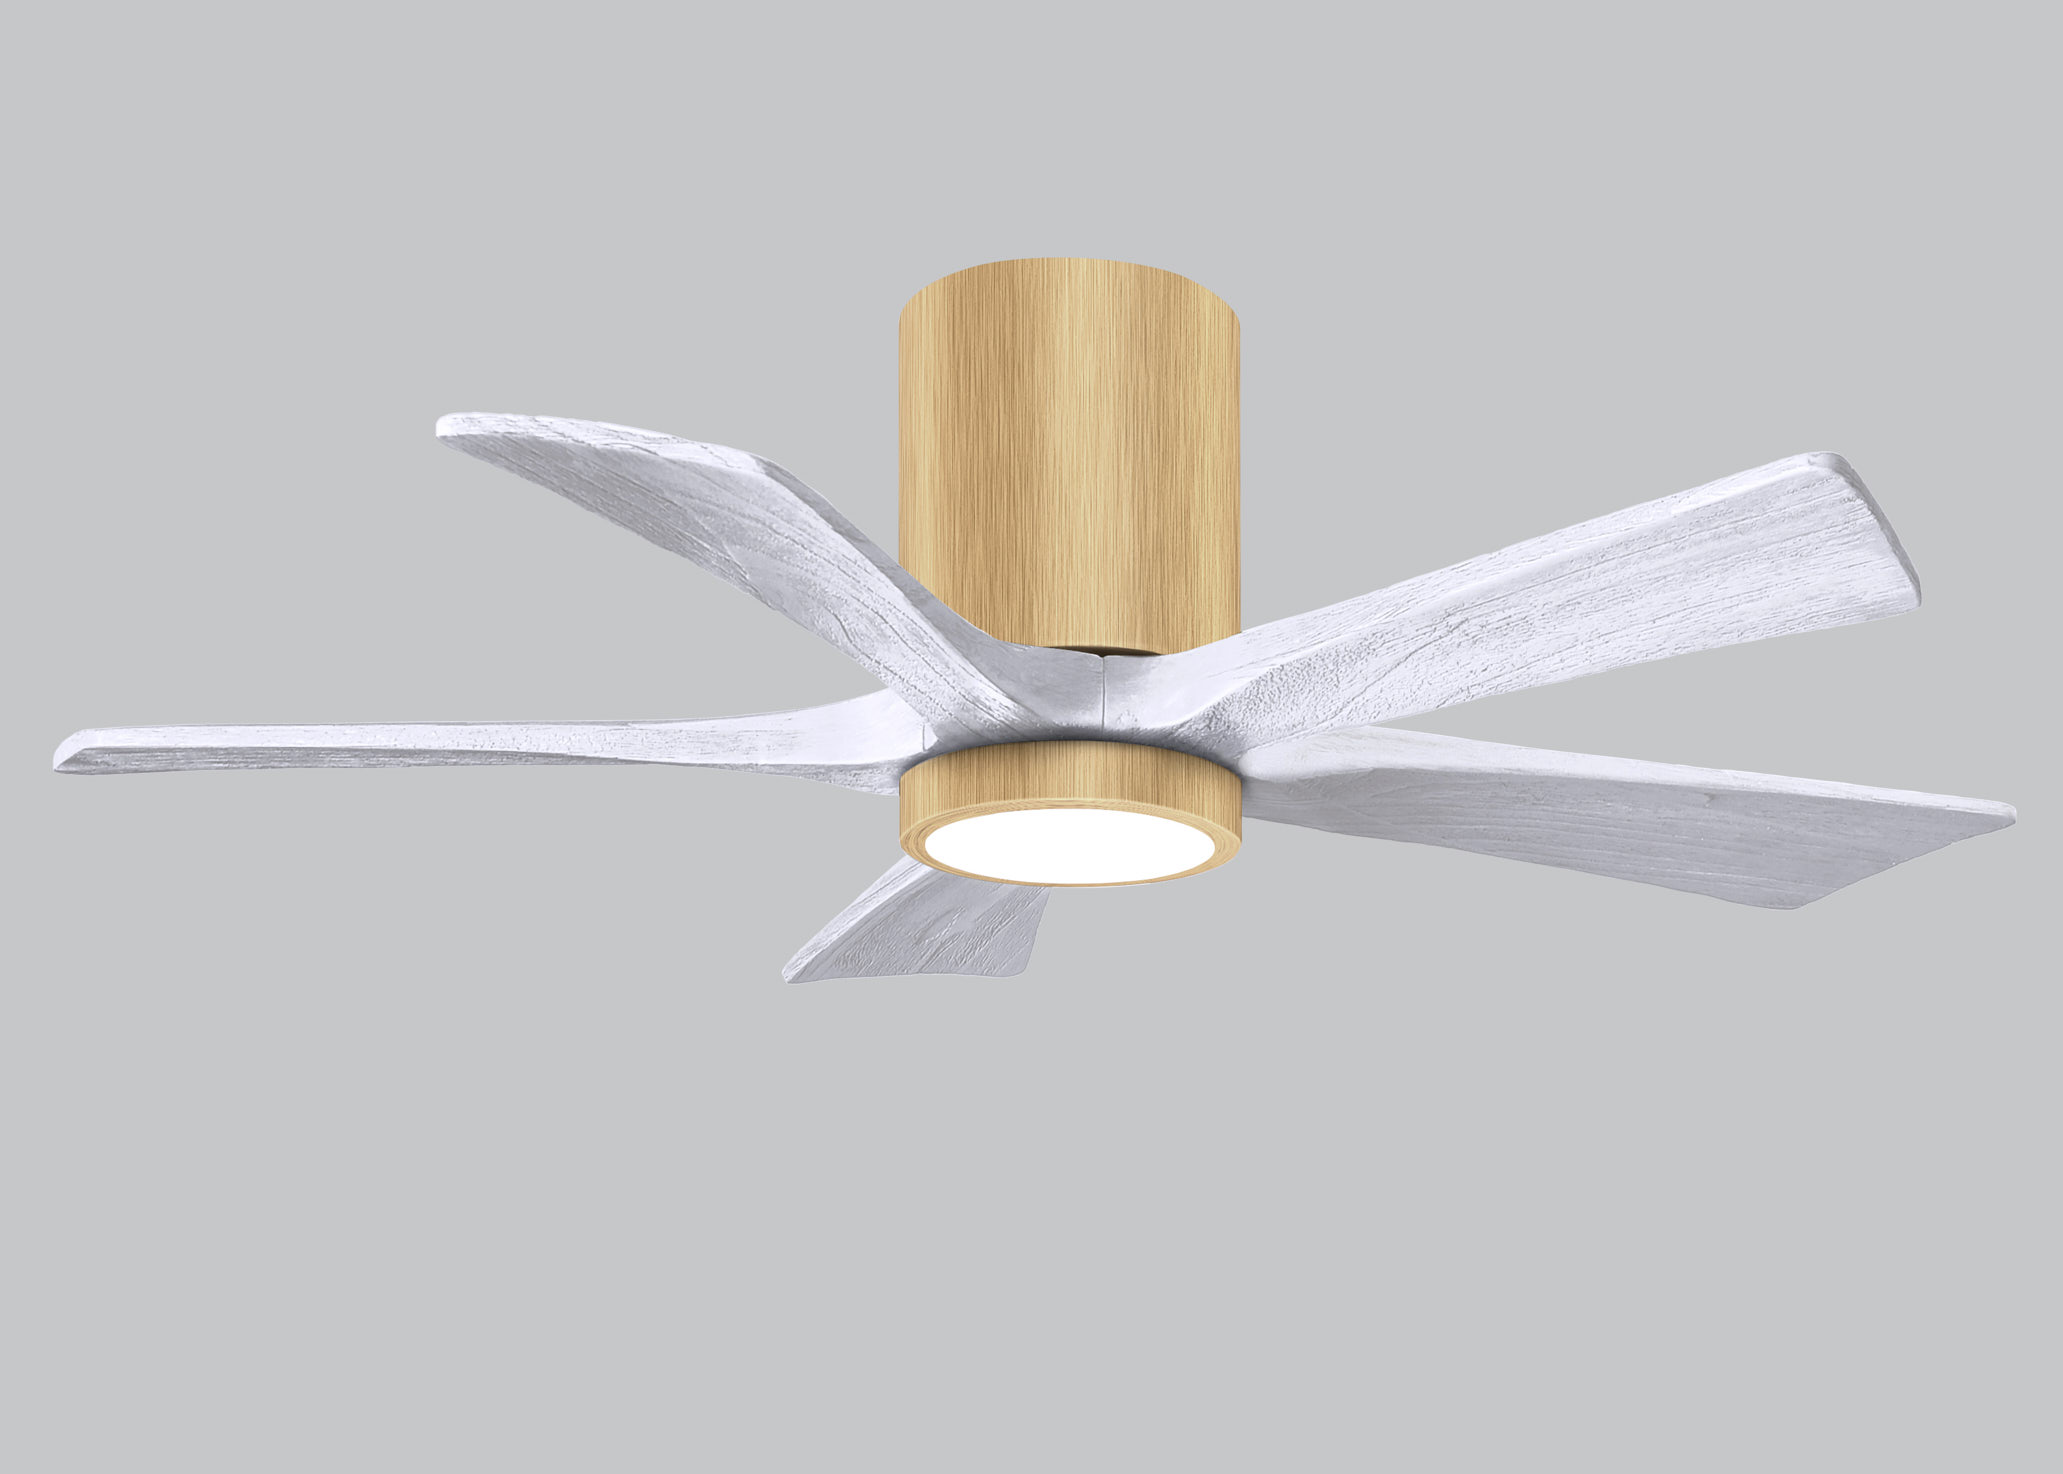 Irene-5HLK 6-speed ceiling fan in light maple finish with 42